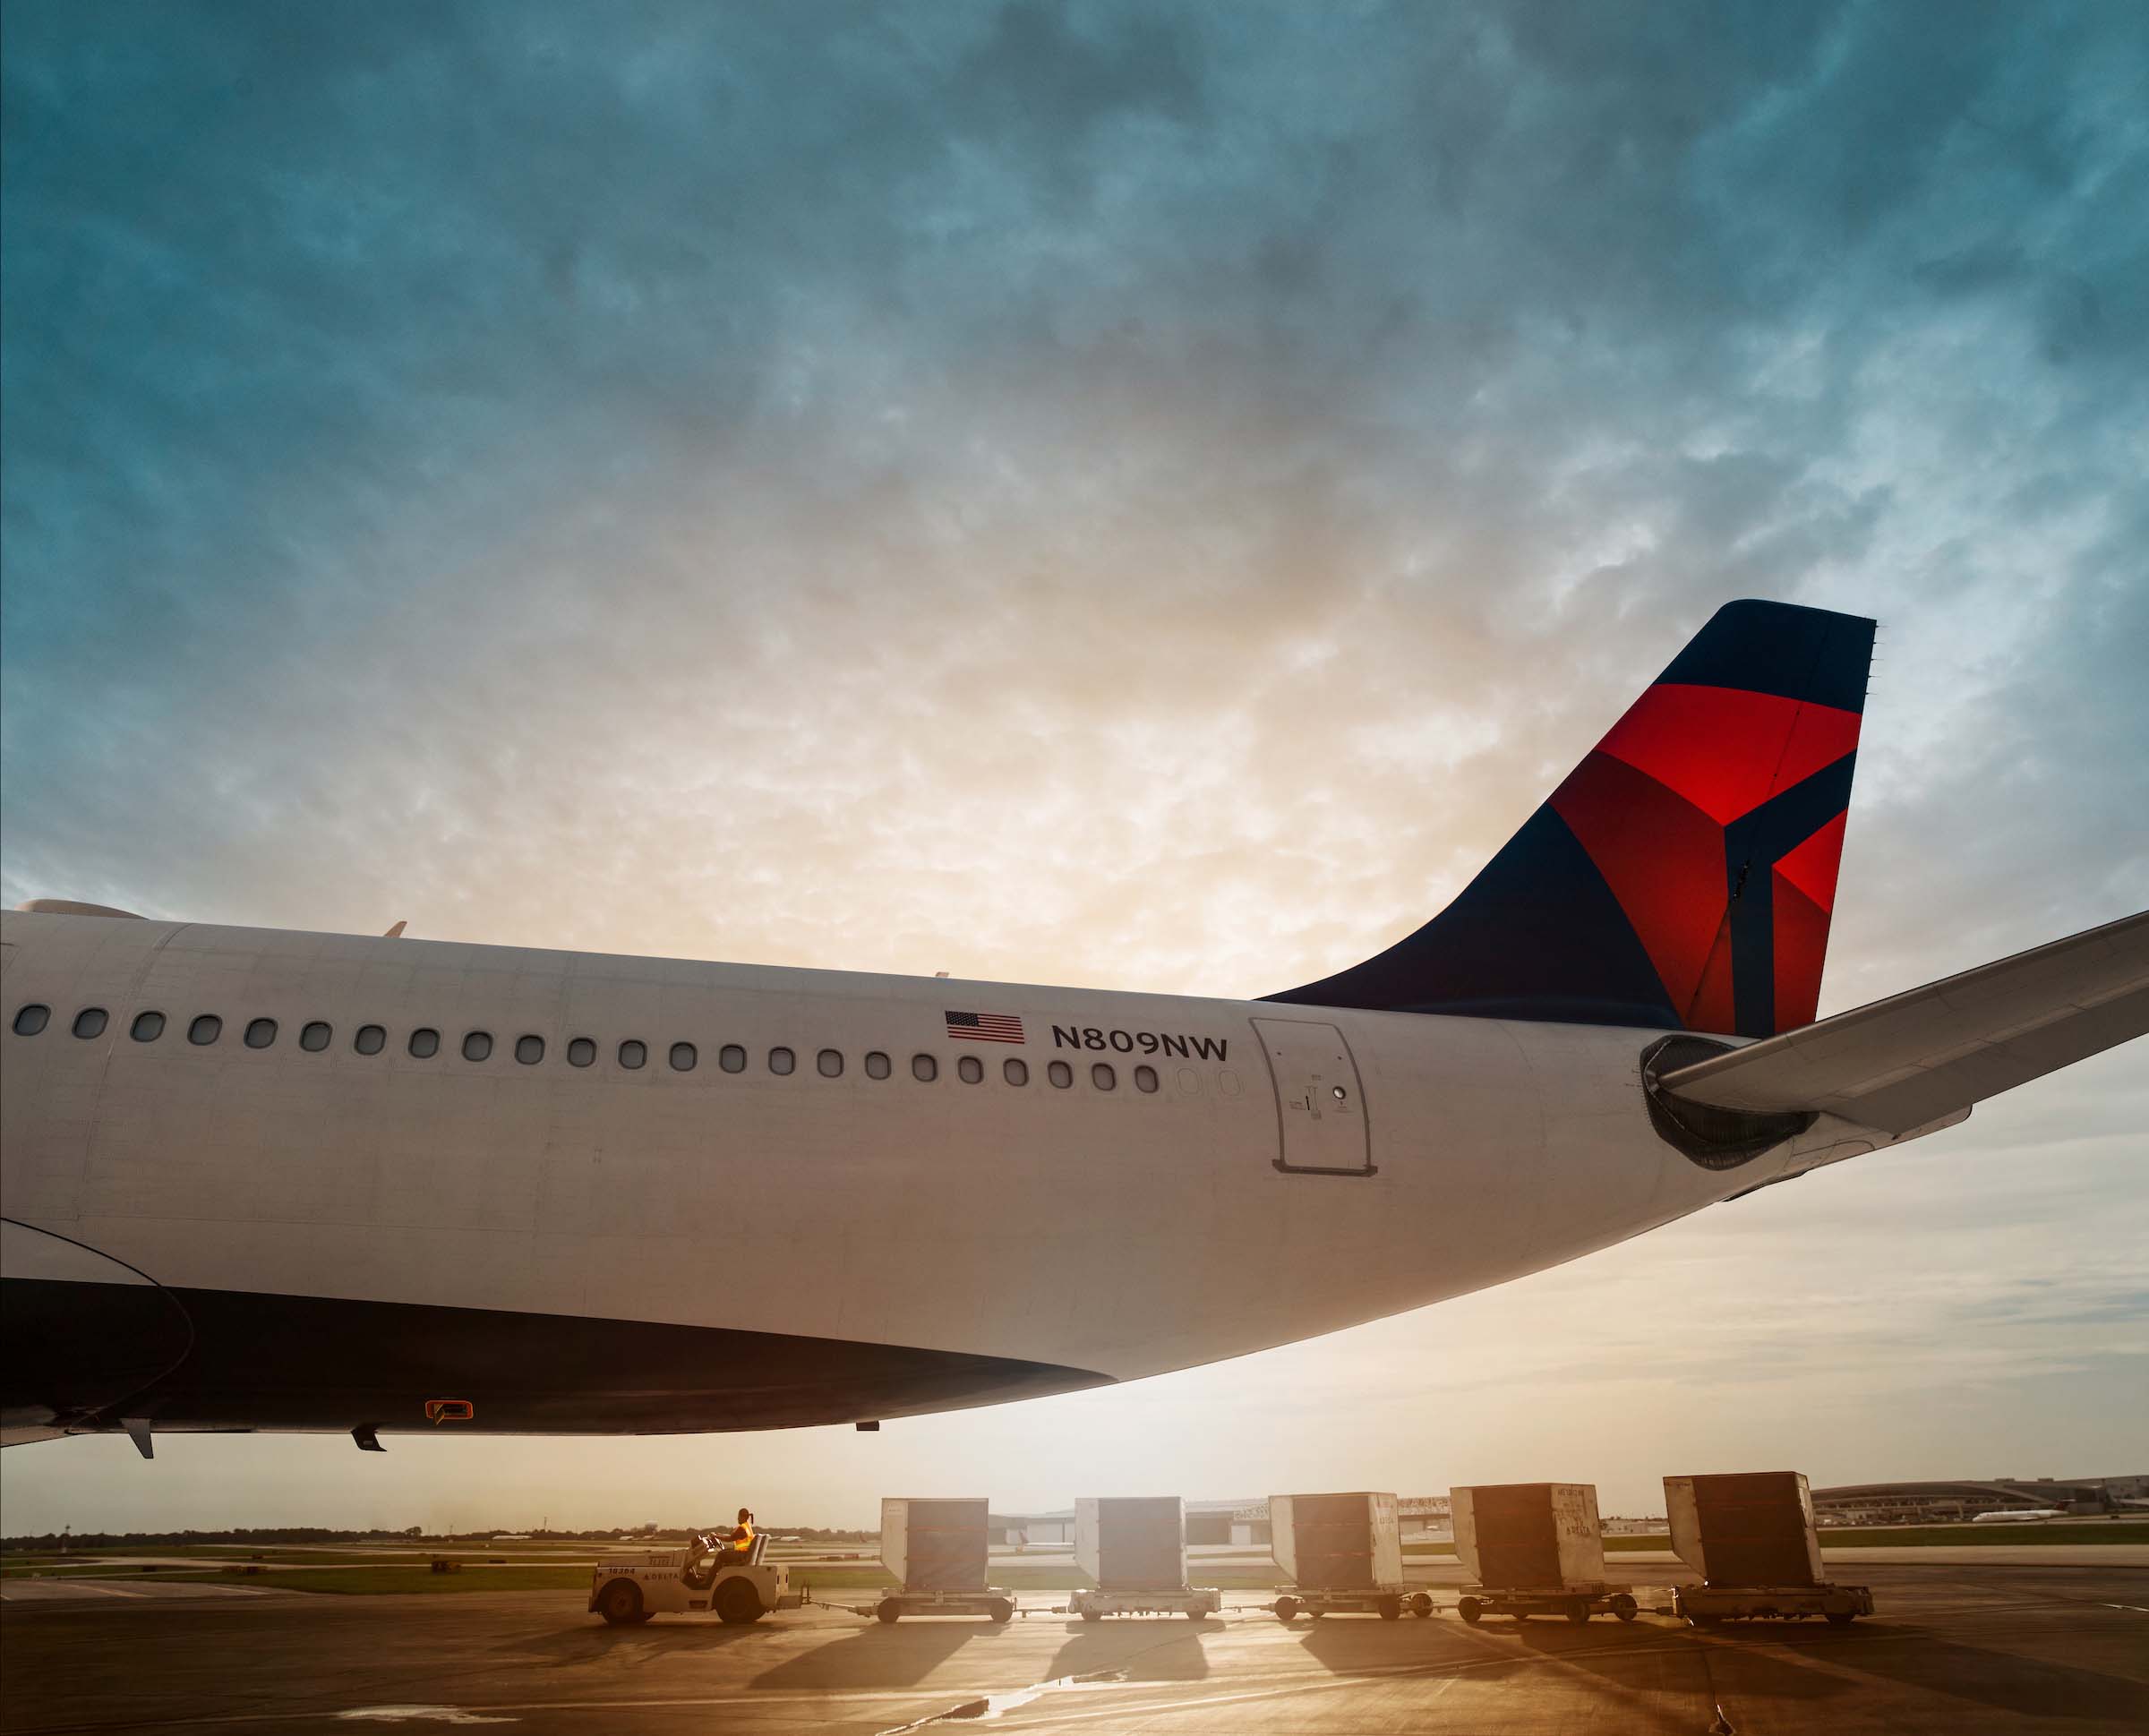 Photo: Delta Air Lines